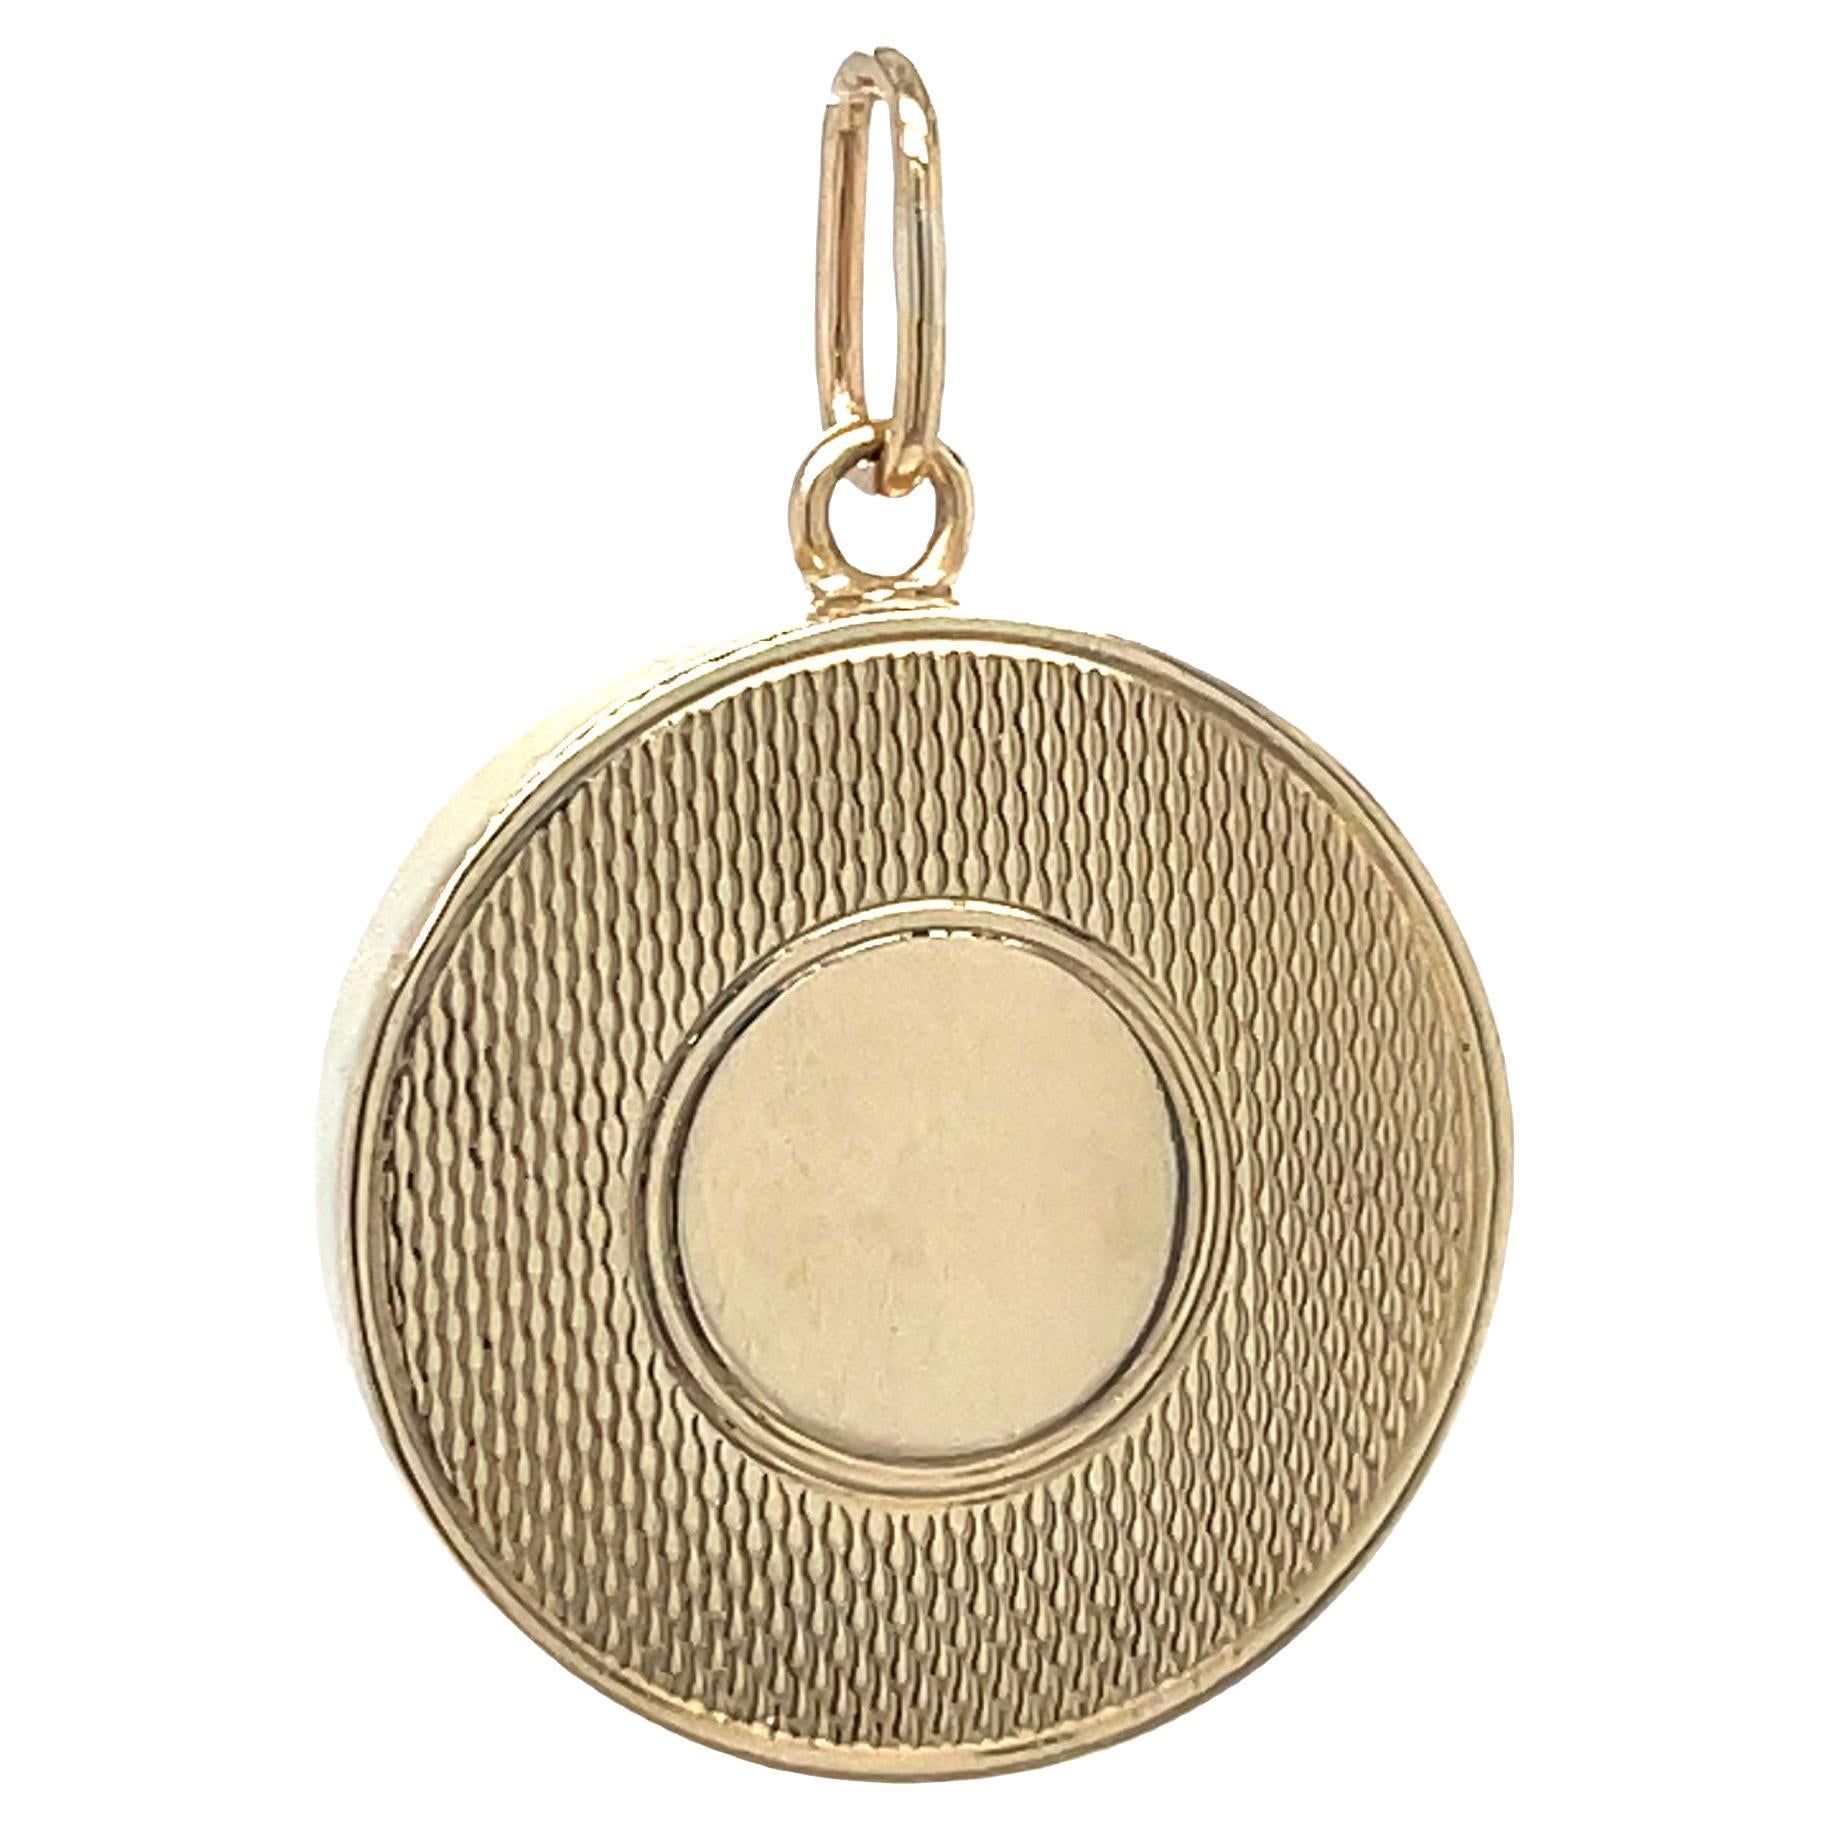 Vintage Tiffany & Co. 14k Yellow Gold Key Holder Charm Enhancer Pendant